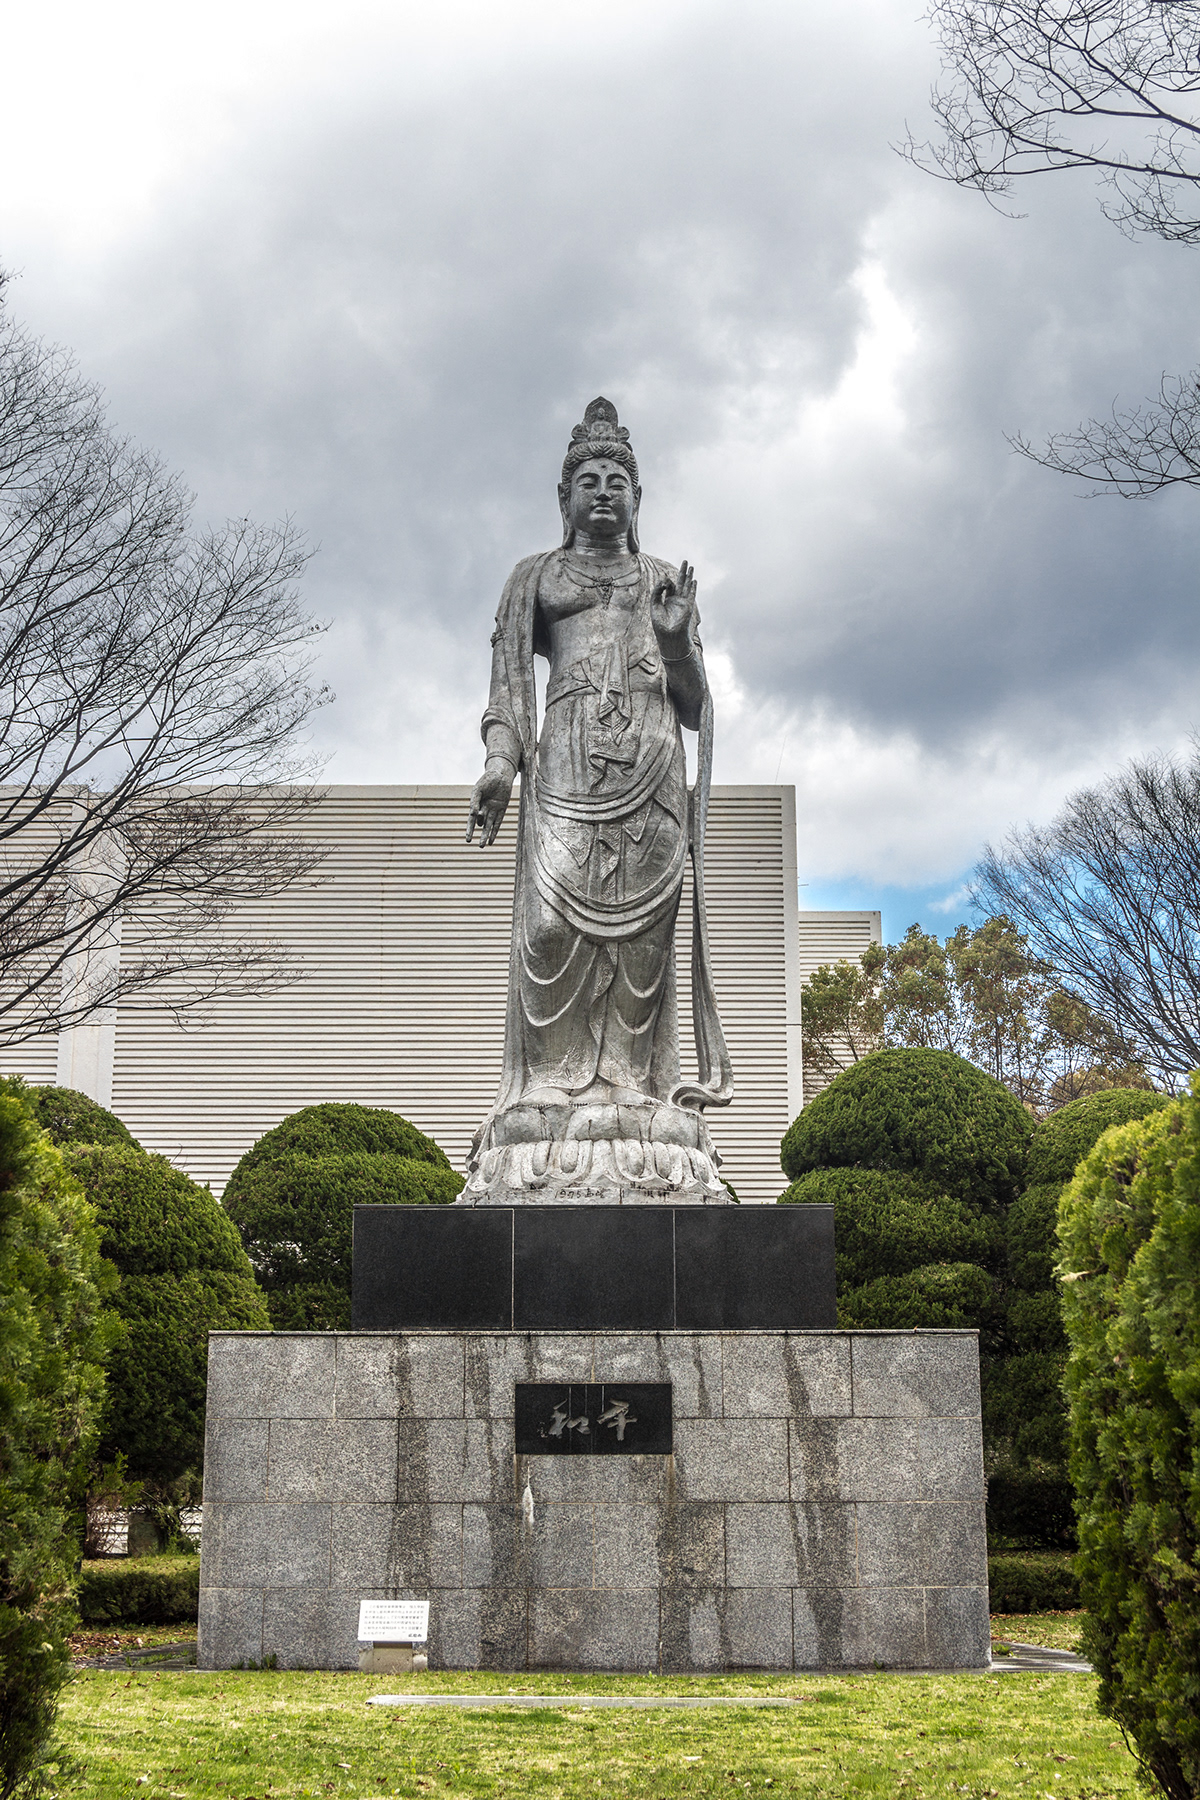 japan hannover stuttgart aokigahara kamakura Nikko hattori hanzo miyamoto Musashi kyoto osaka tokyo hiroshima